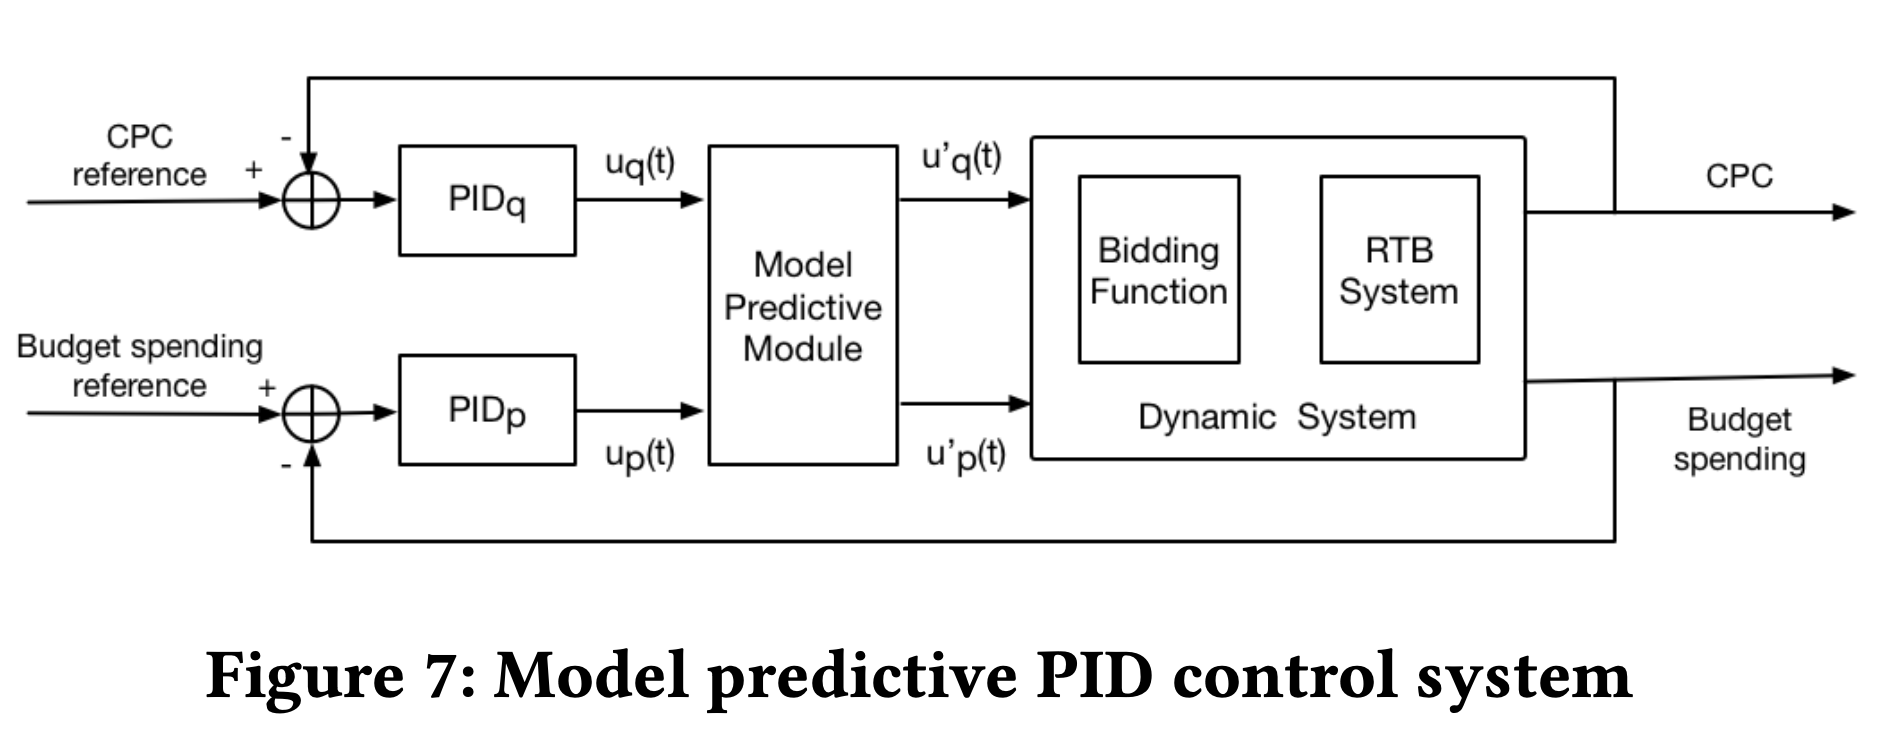 Model Predictive PID Control System